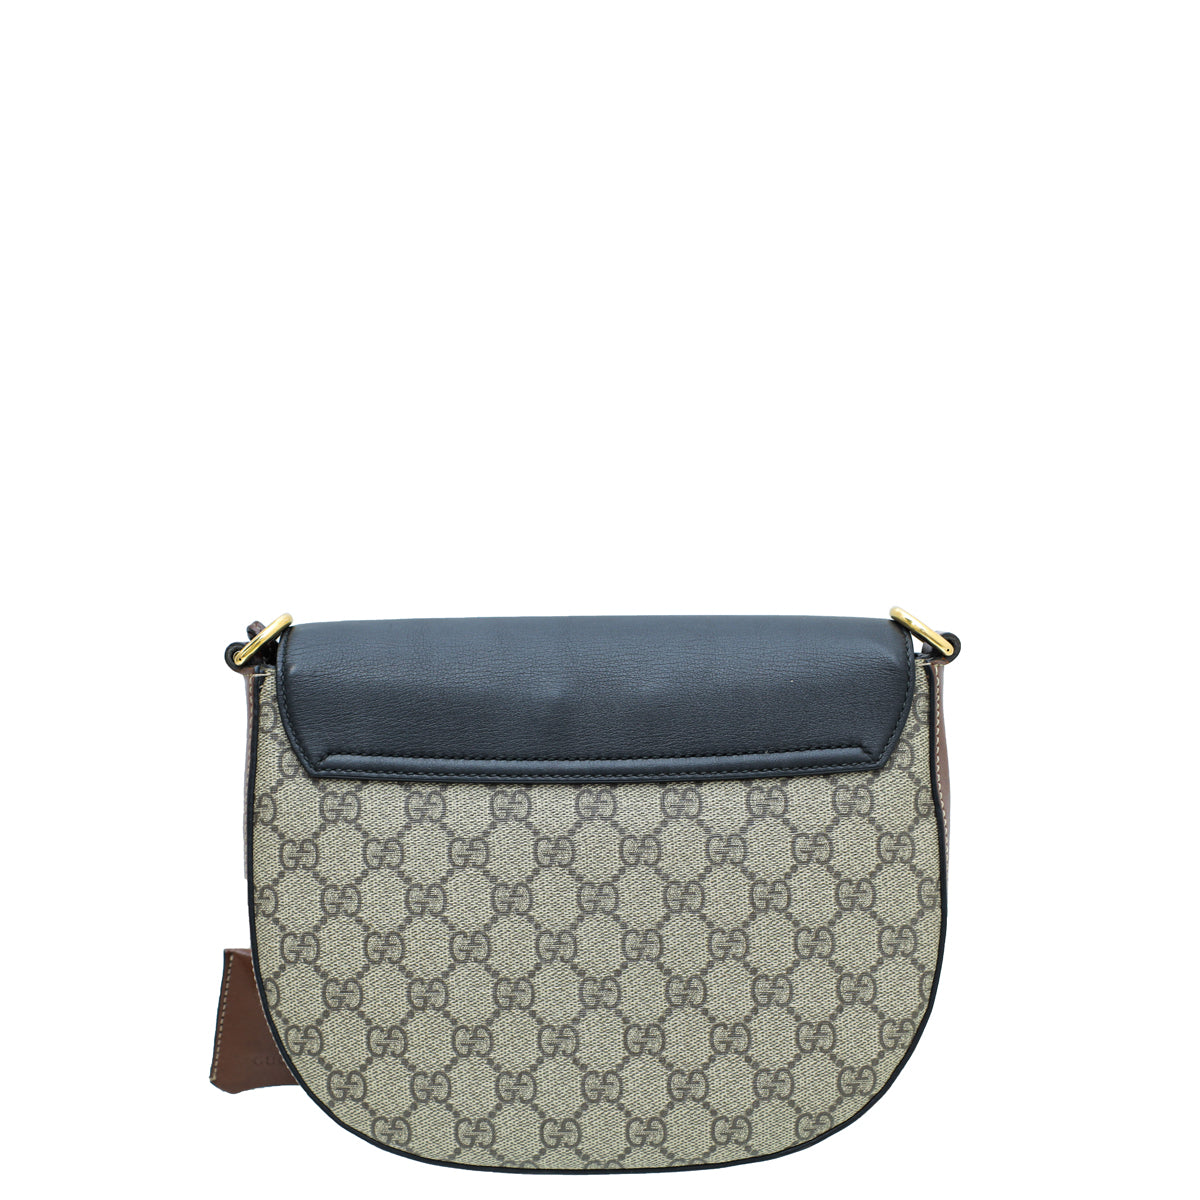 Gucci Padlock Medium GG Supreme Canvas Shoulder Bag